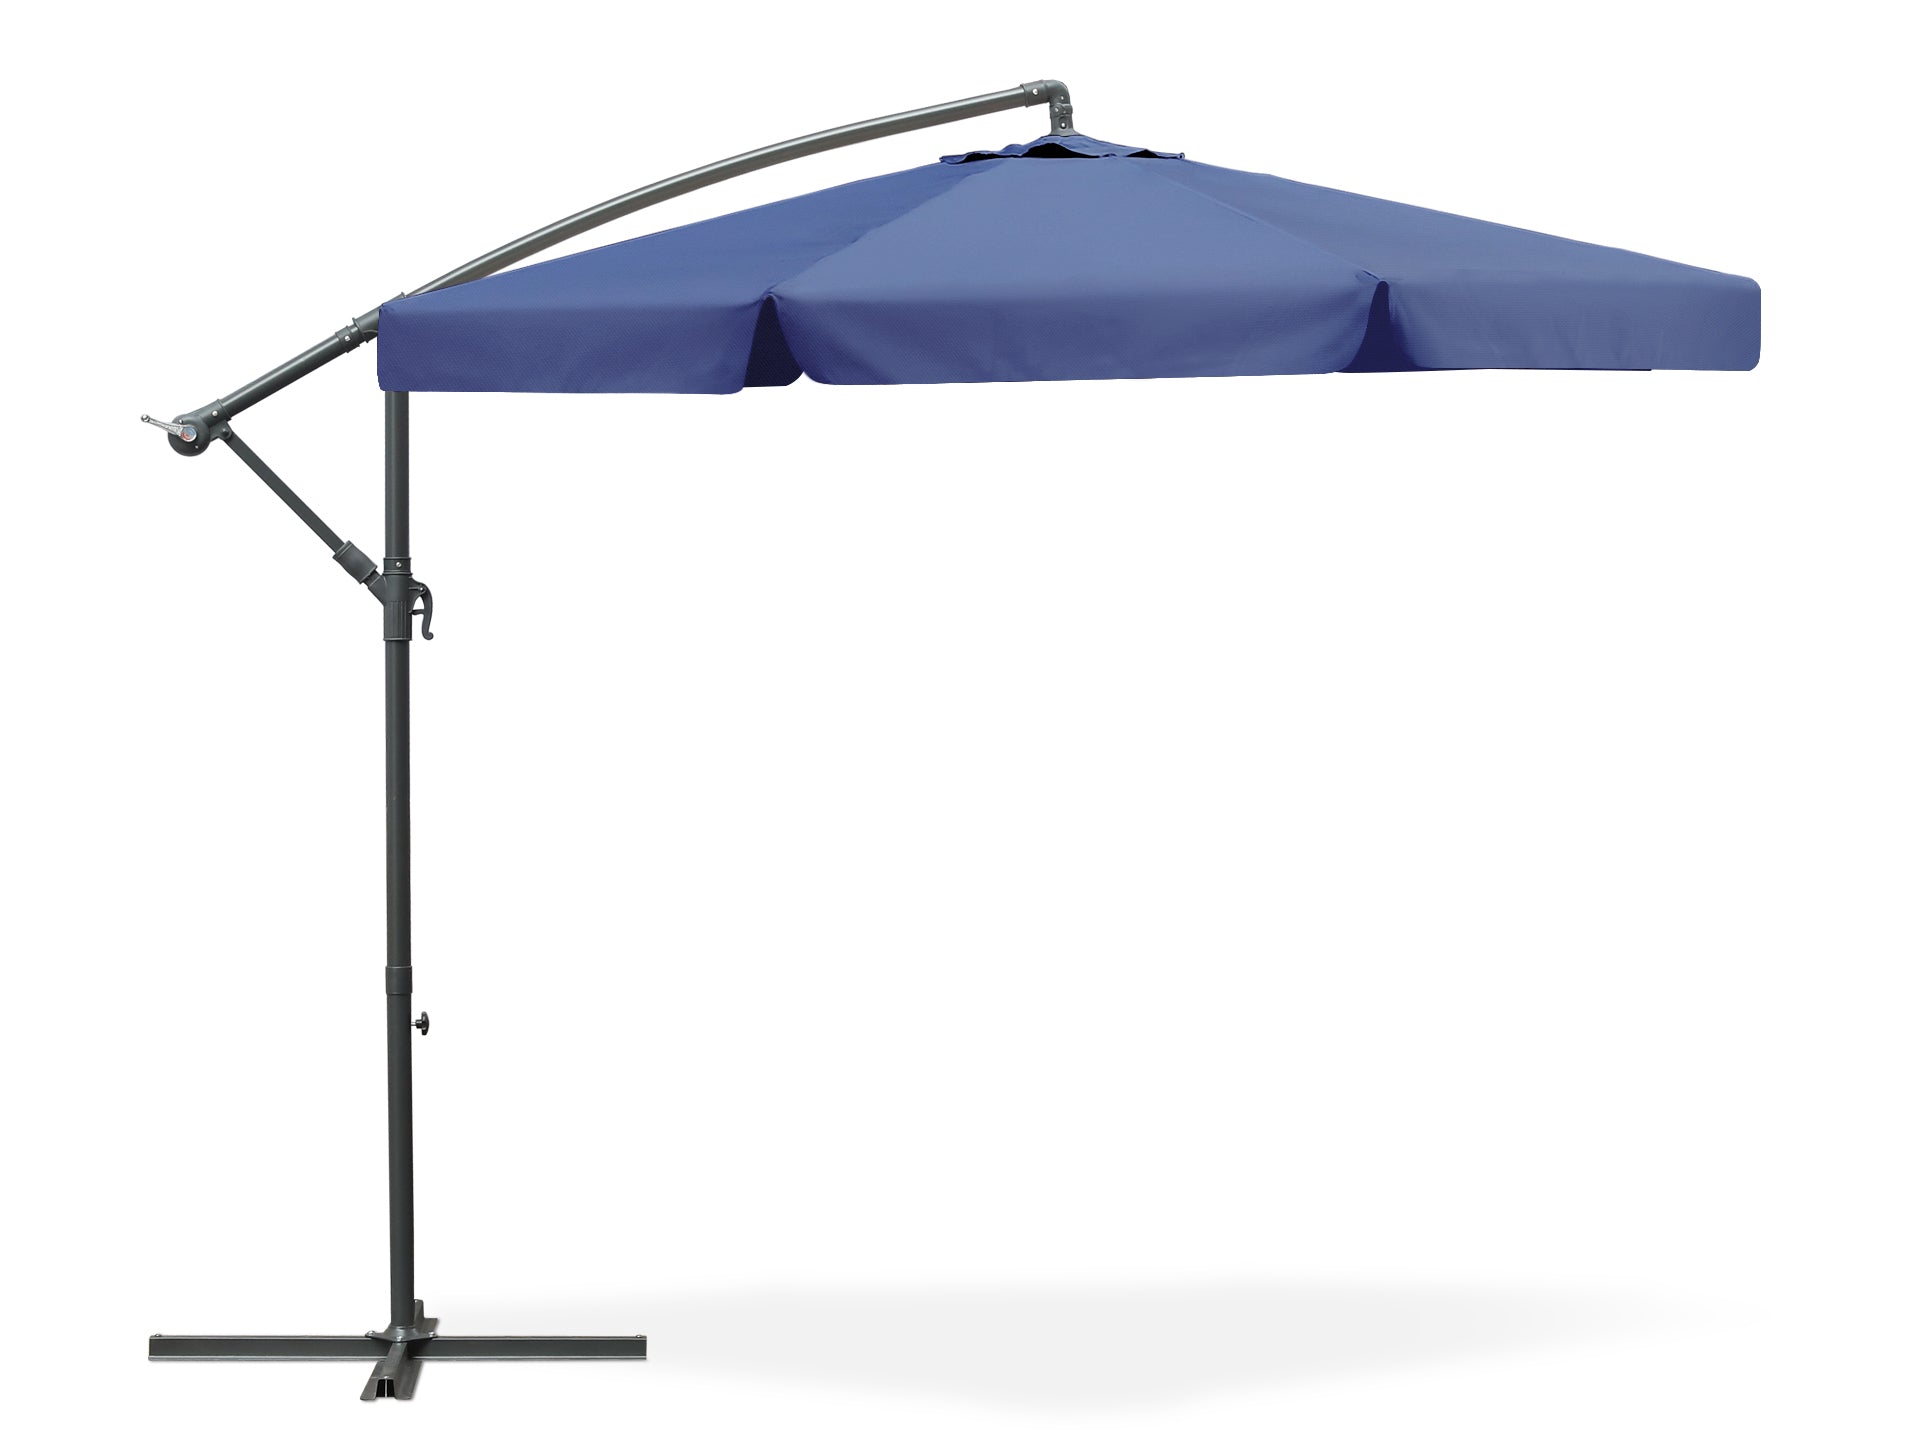 TOUGHOUT Puriri Outdoor Cantilever Umbrella 3m